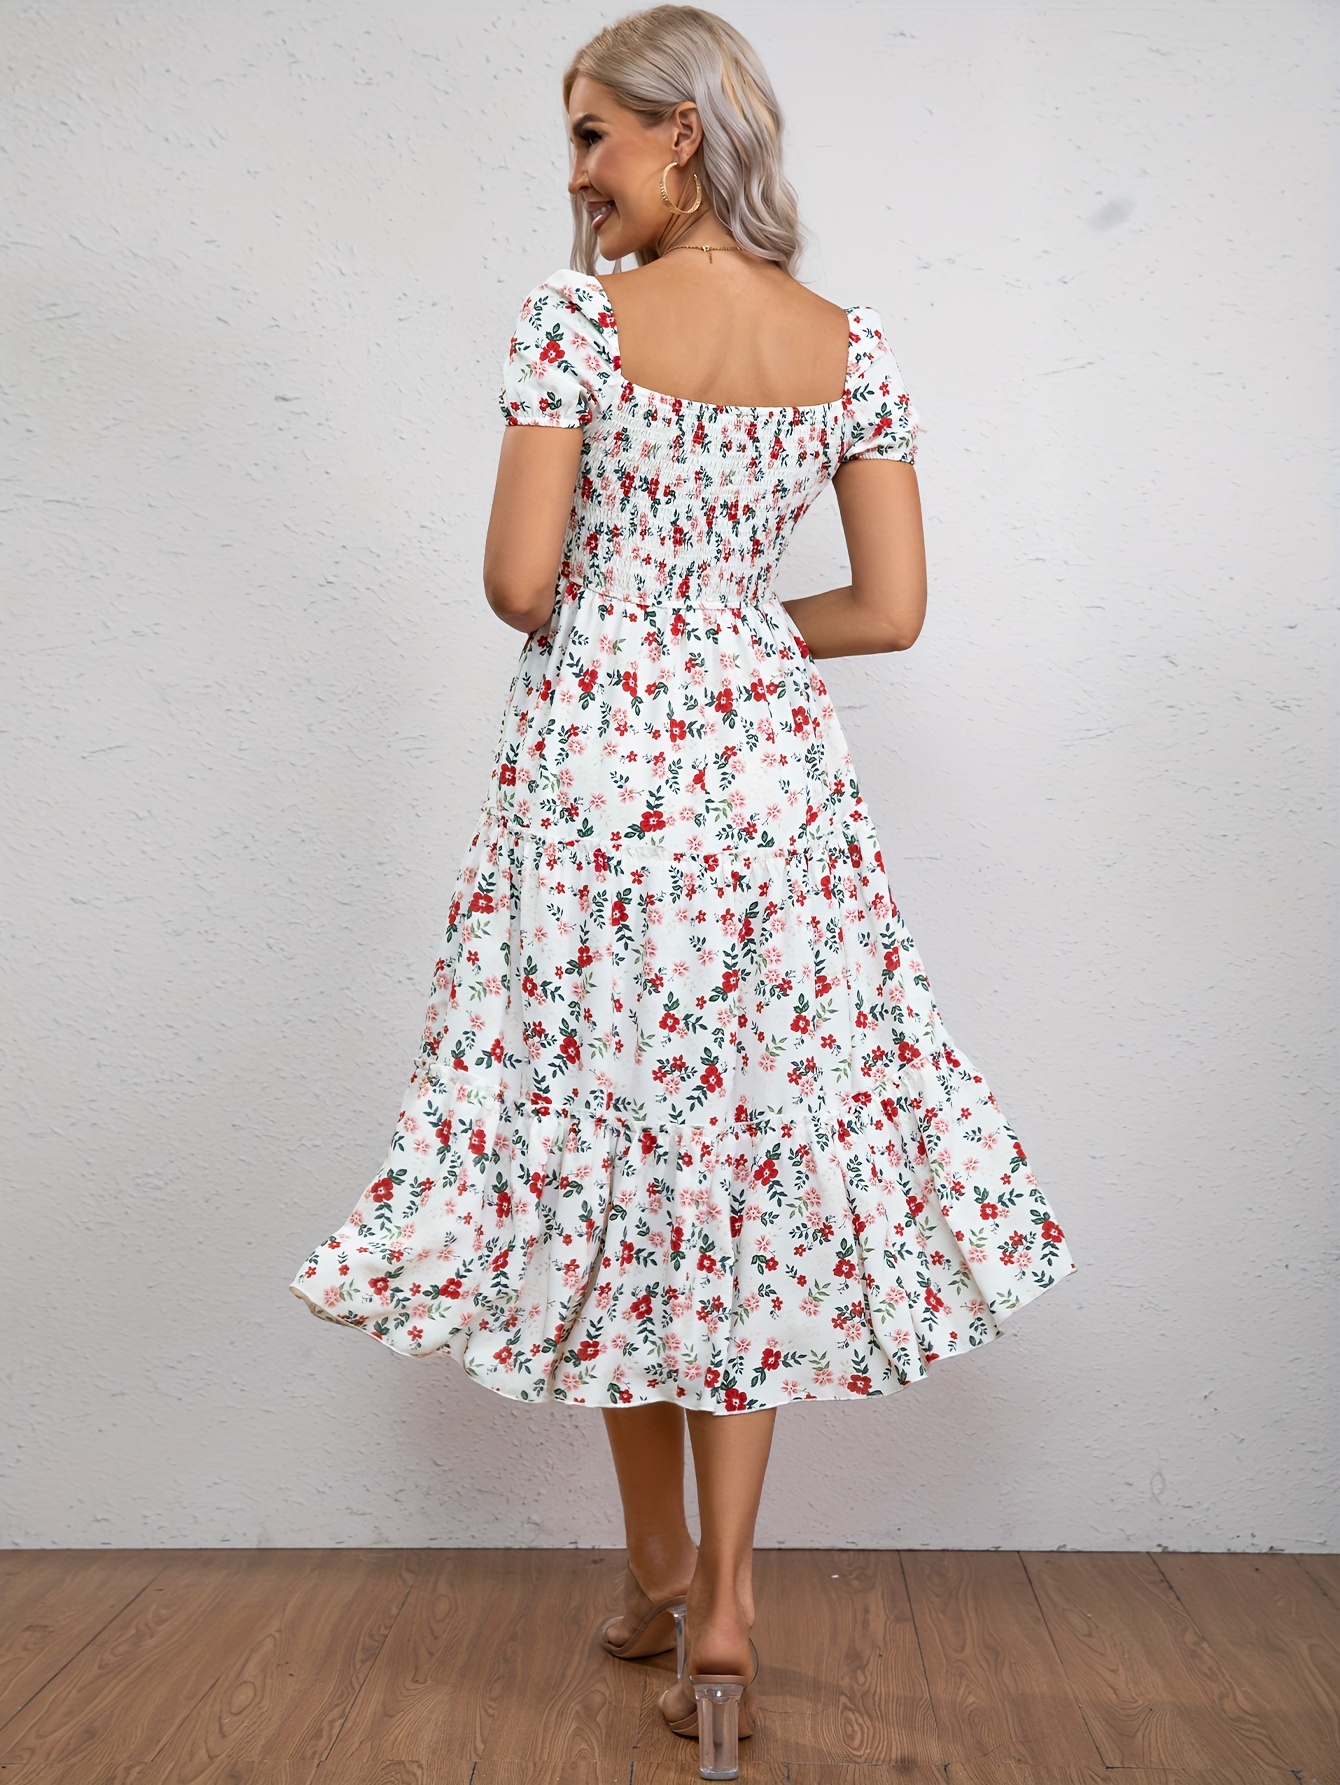 floral pattern dress elegant short sleeve dress for spring summer womens clothing